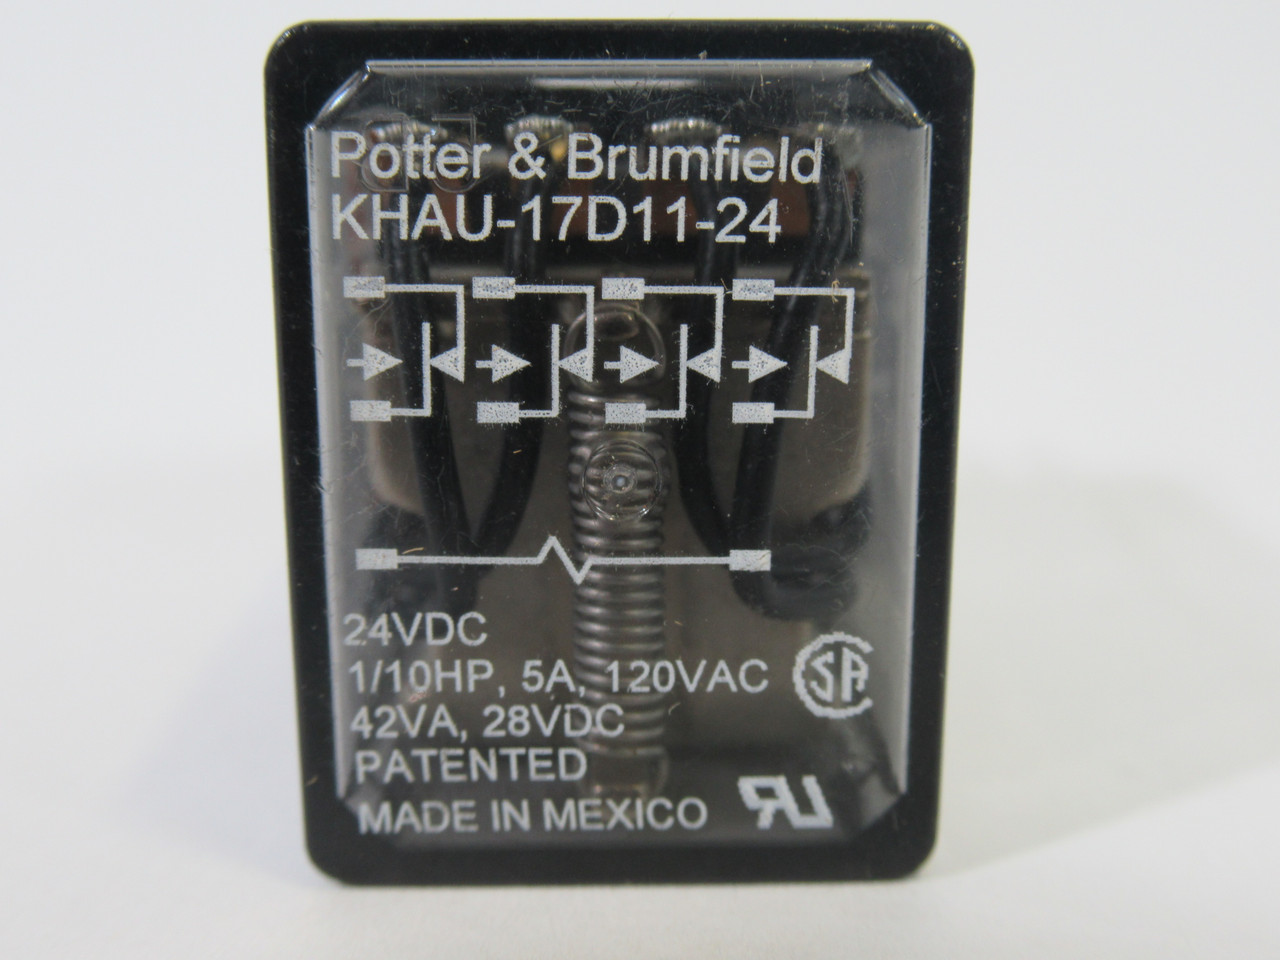 Potter & Brumfield KHAU-17D11-24 Relay 24VDC 5A 1/10HP 14 Blade USED